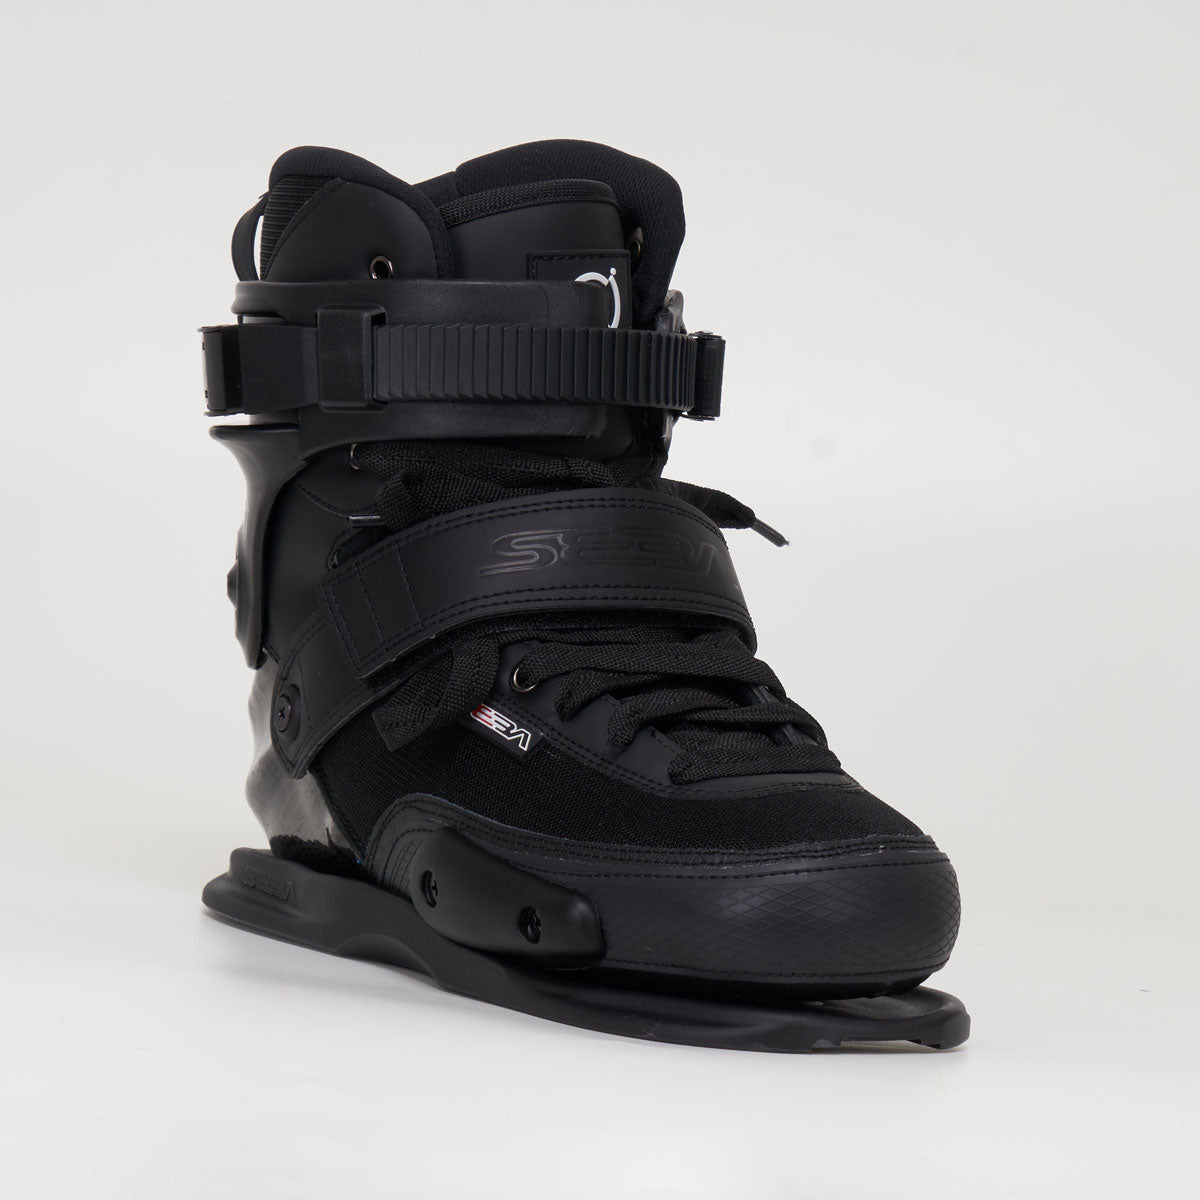 Seba CJ Carbon Skates  (Carbon fibre boot) - Boot Only